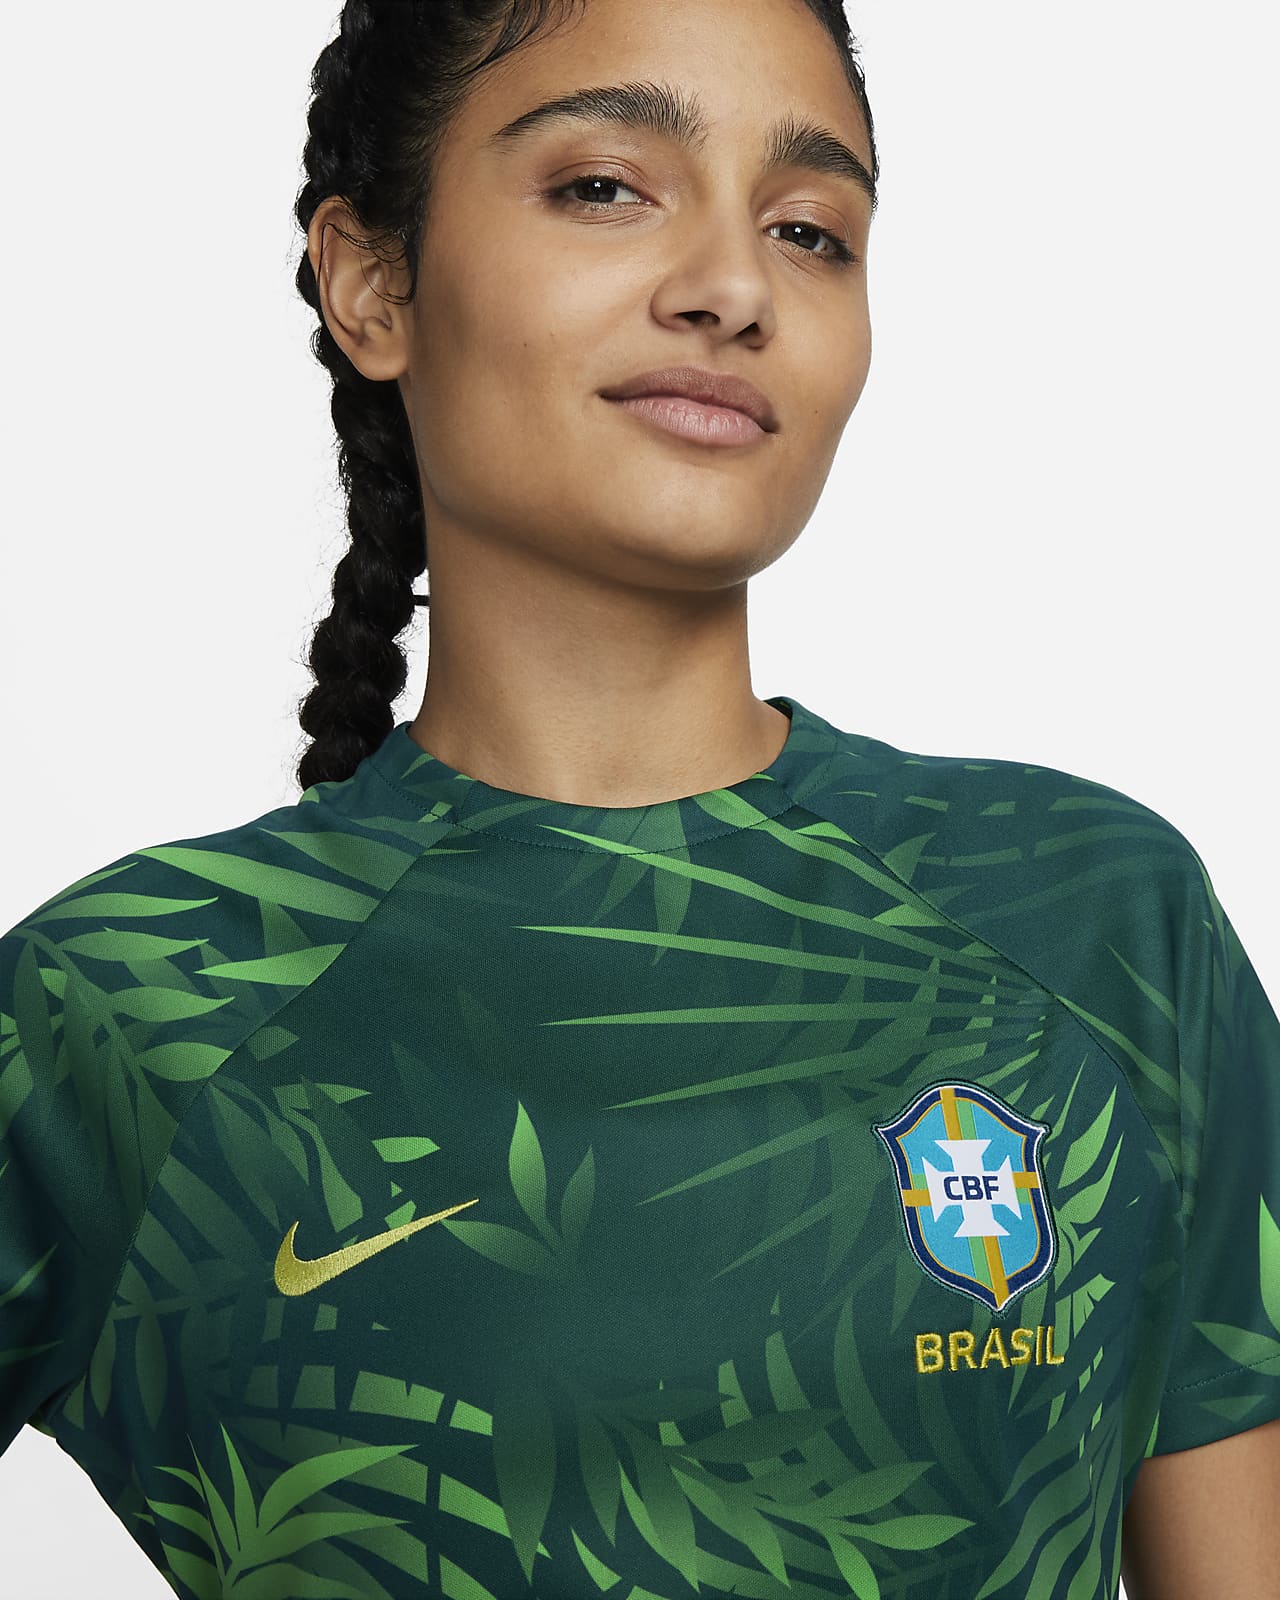 Nike Brazil Pre-Match Jersey 2018-19